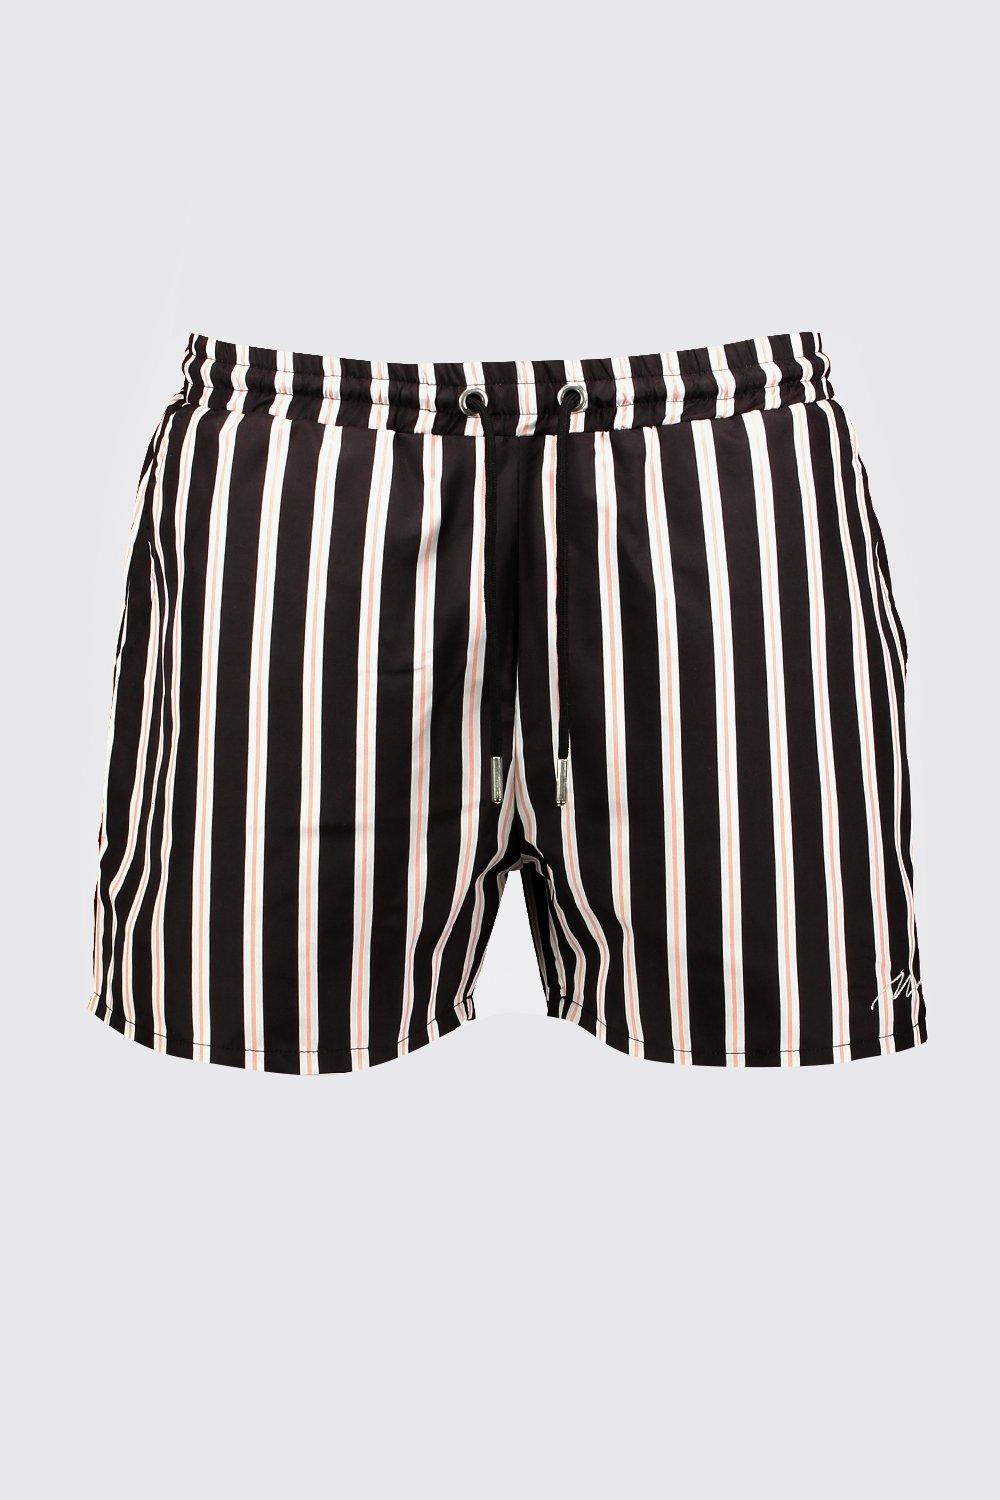 black and white striped swim trunks